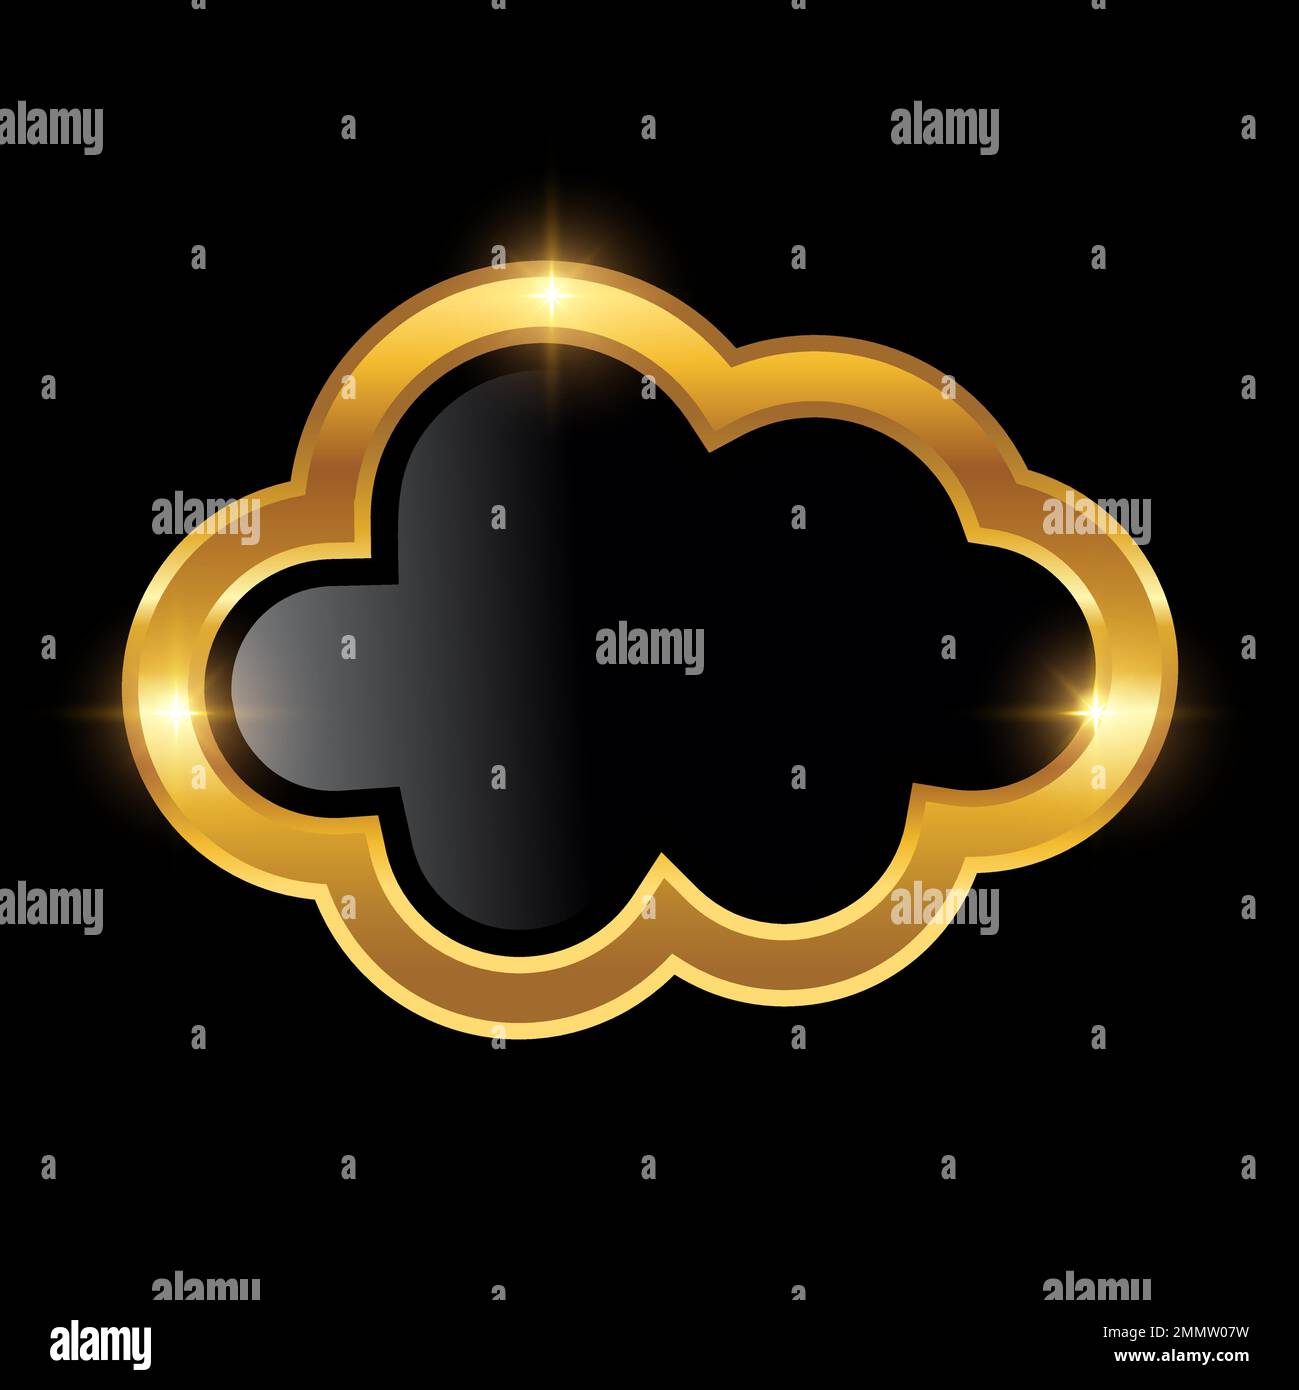 Goldenes Wolkensymbol Vektorsymbol Illustration auf schwarzem Hintergrund mit goldenem Glanzeffekt Stock Vektor